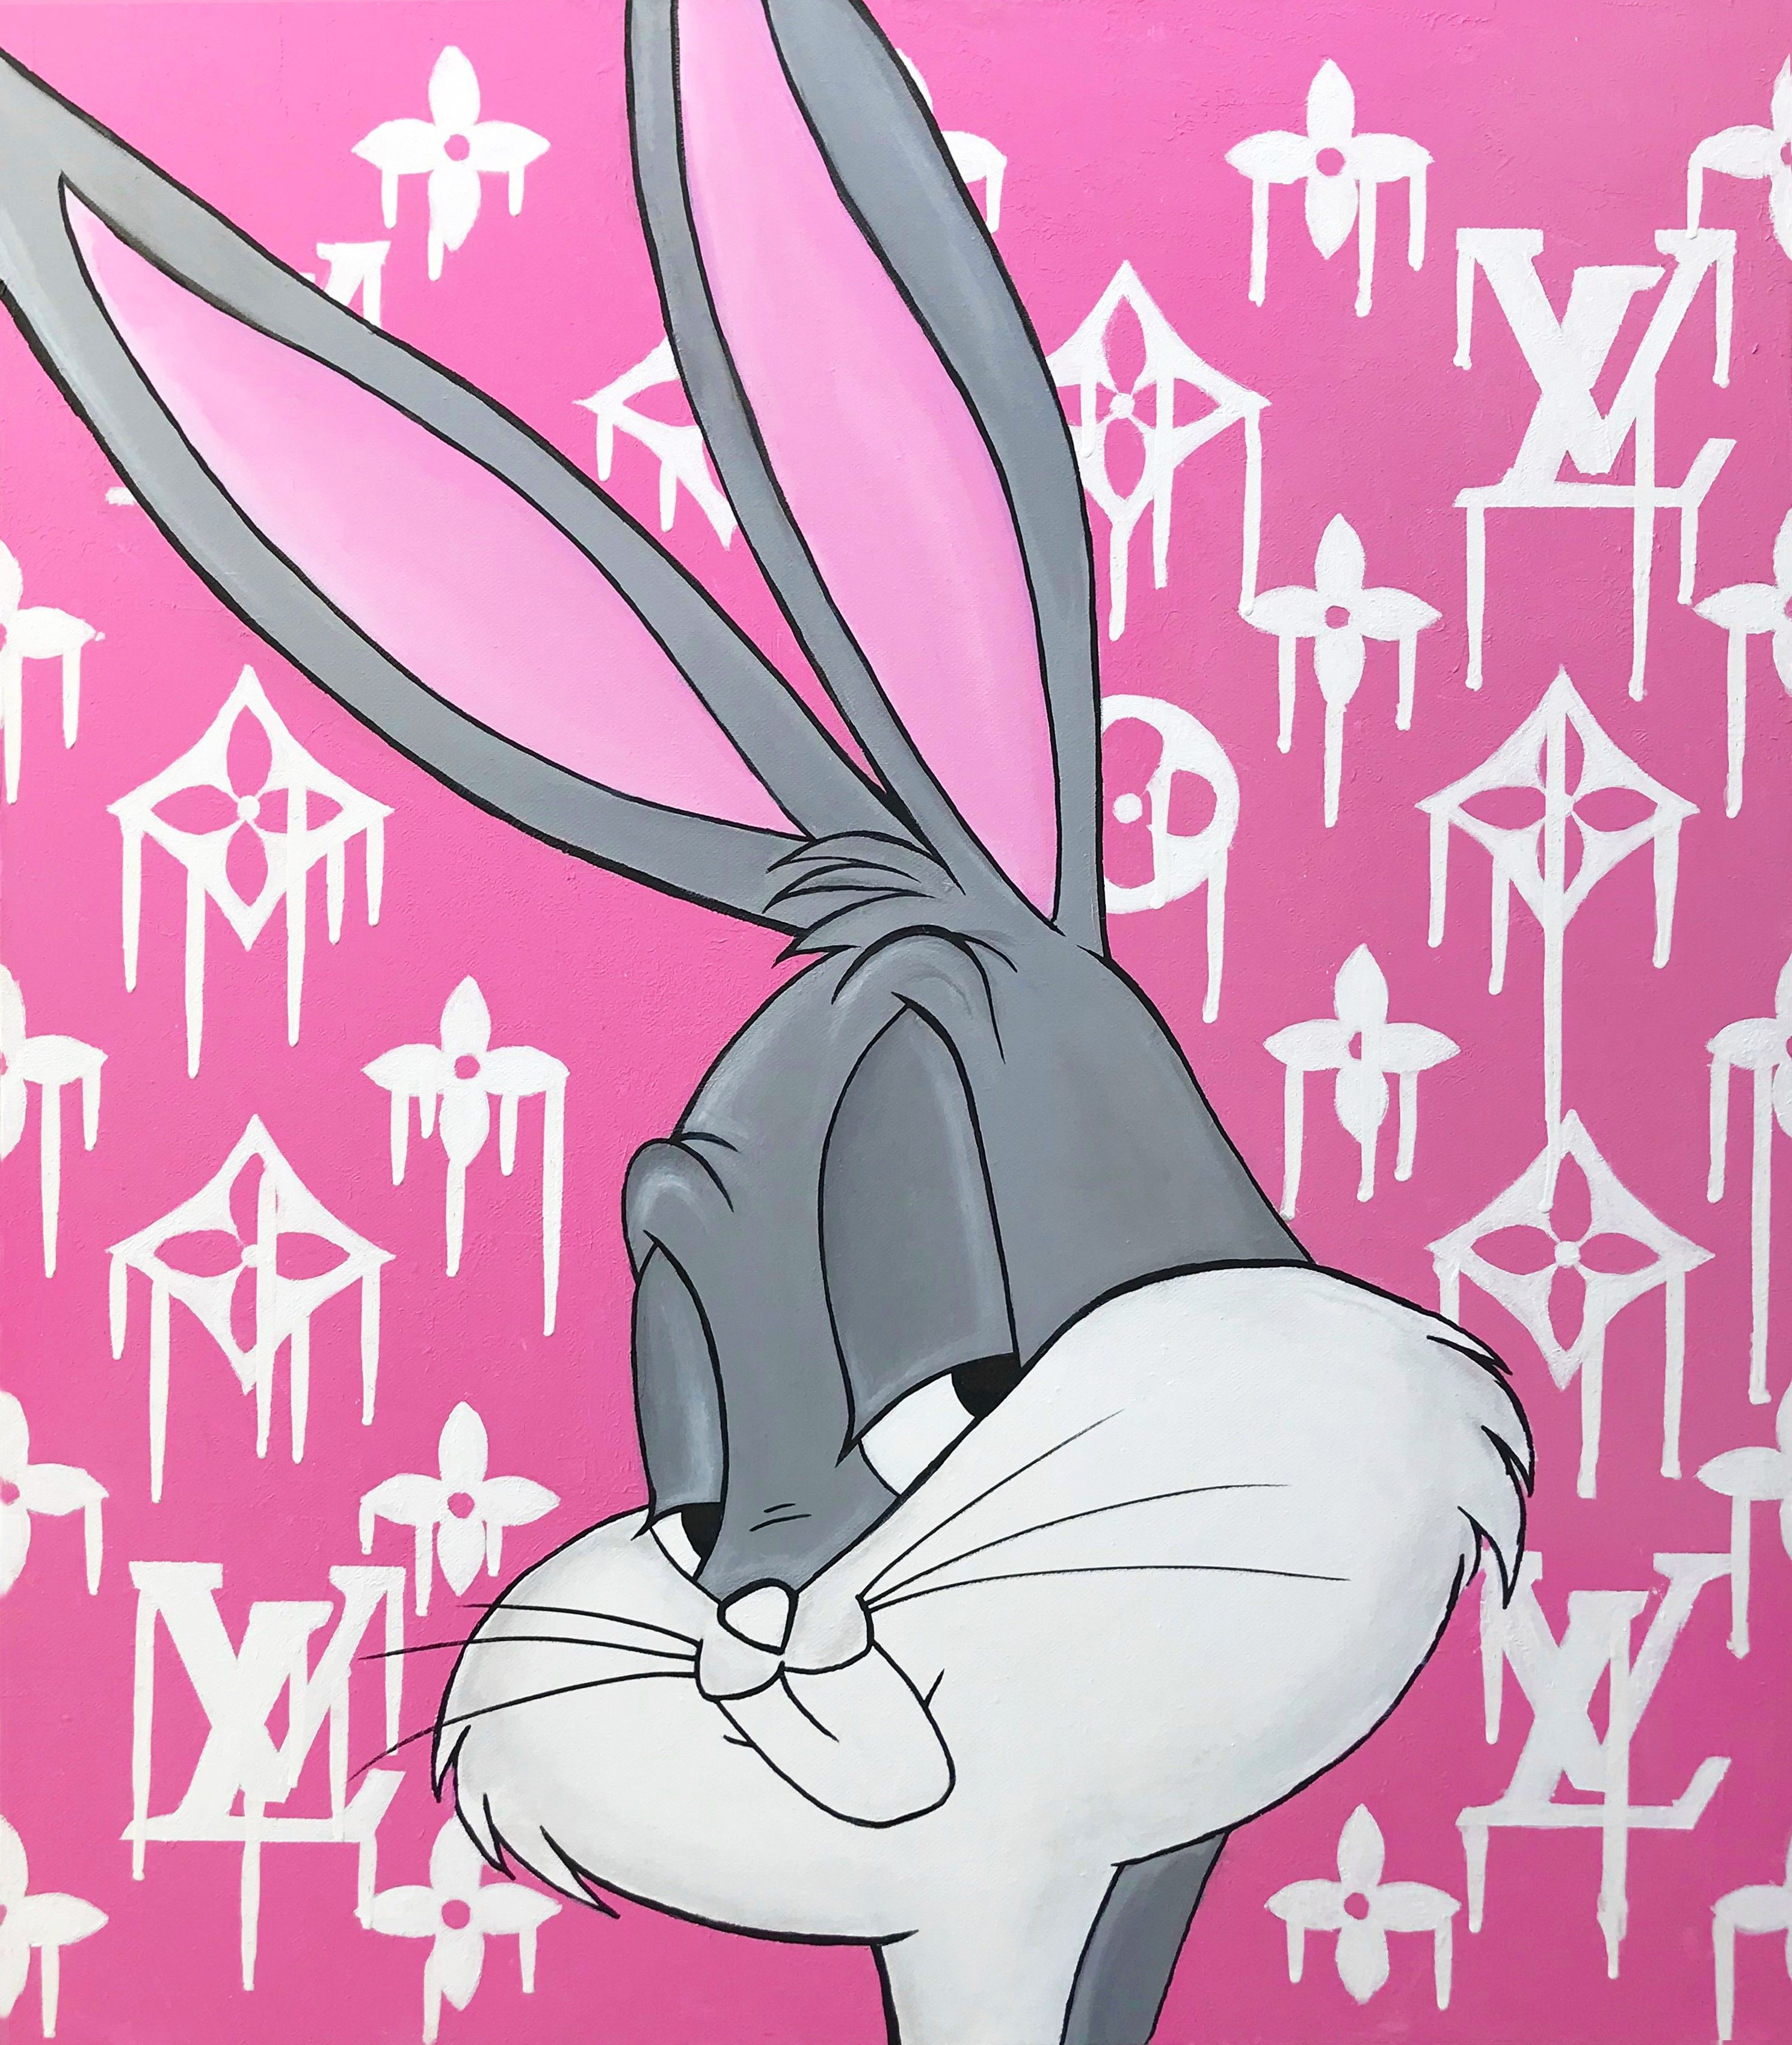 Bugs Bunny Vuitton by Artash Hakobyan, 2021